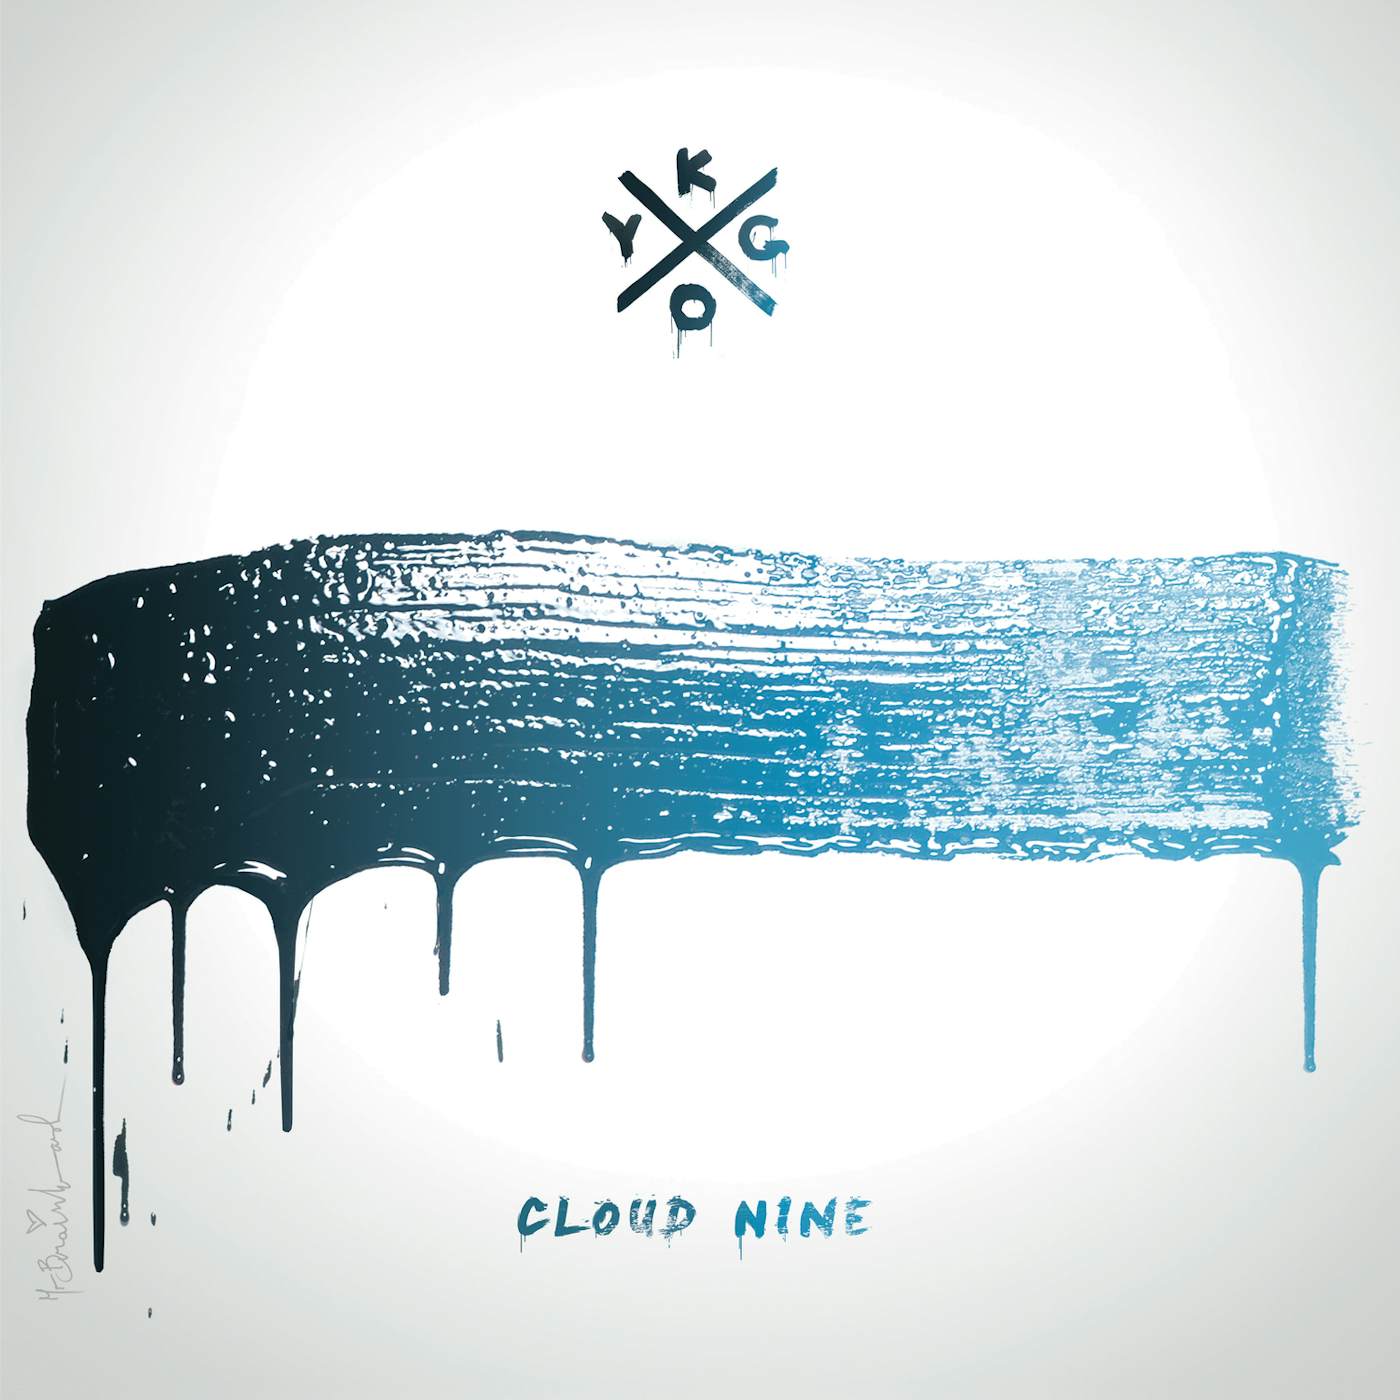 Kygo Cloud Nine Vinyl Record